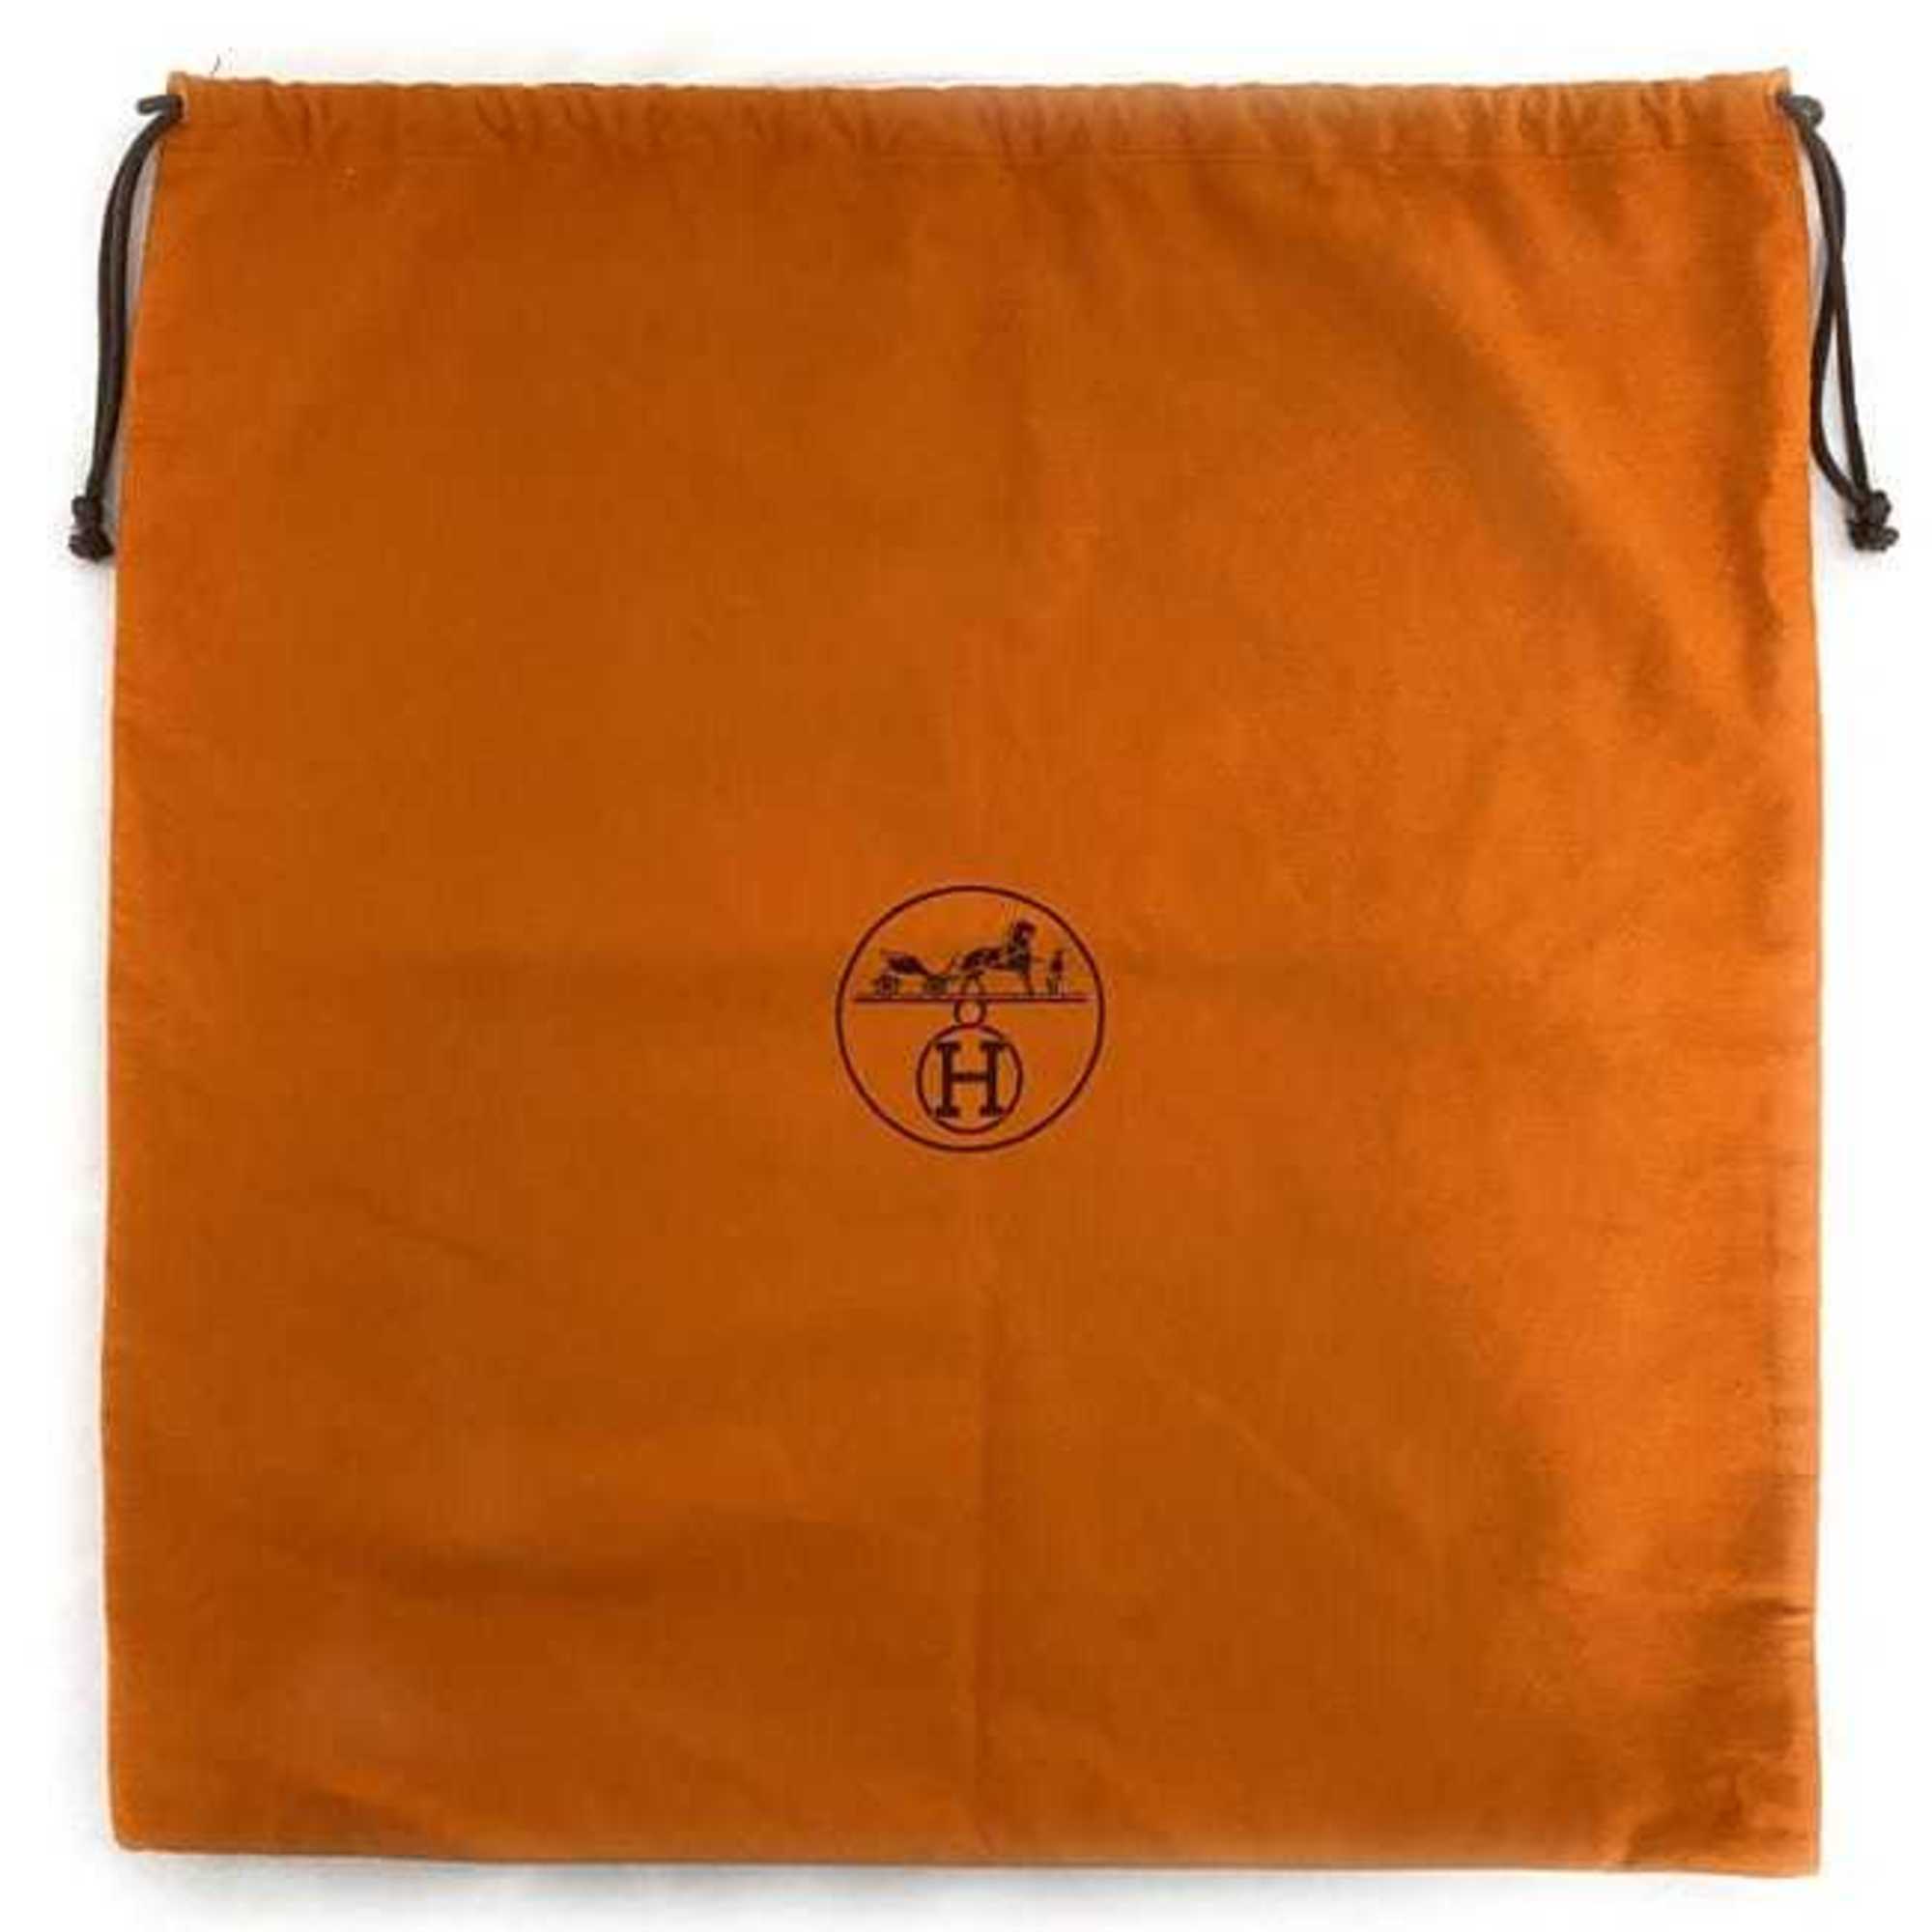 Hermes handbag Valparaiso PM black - f-20618 canvas leather HERMES flap tote bag freestanding ladies